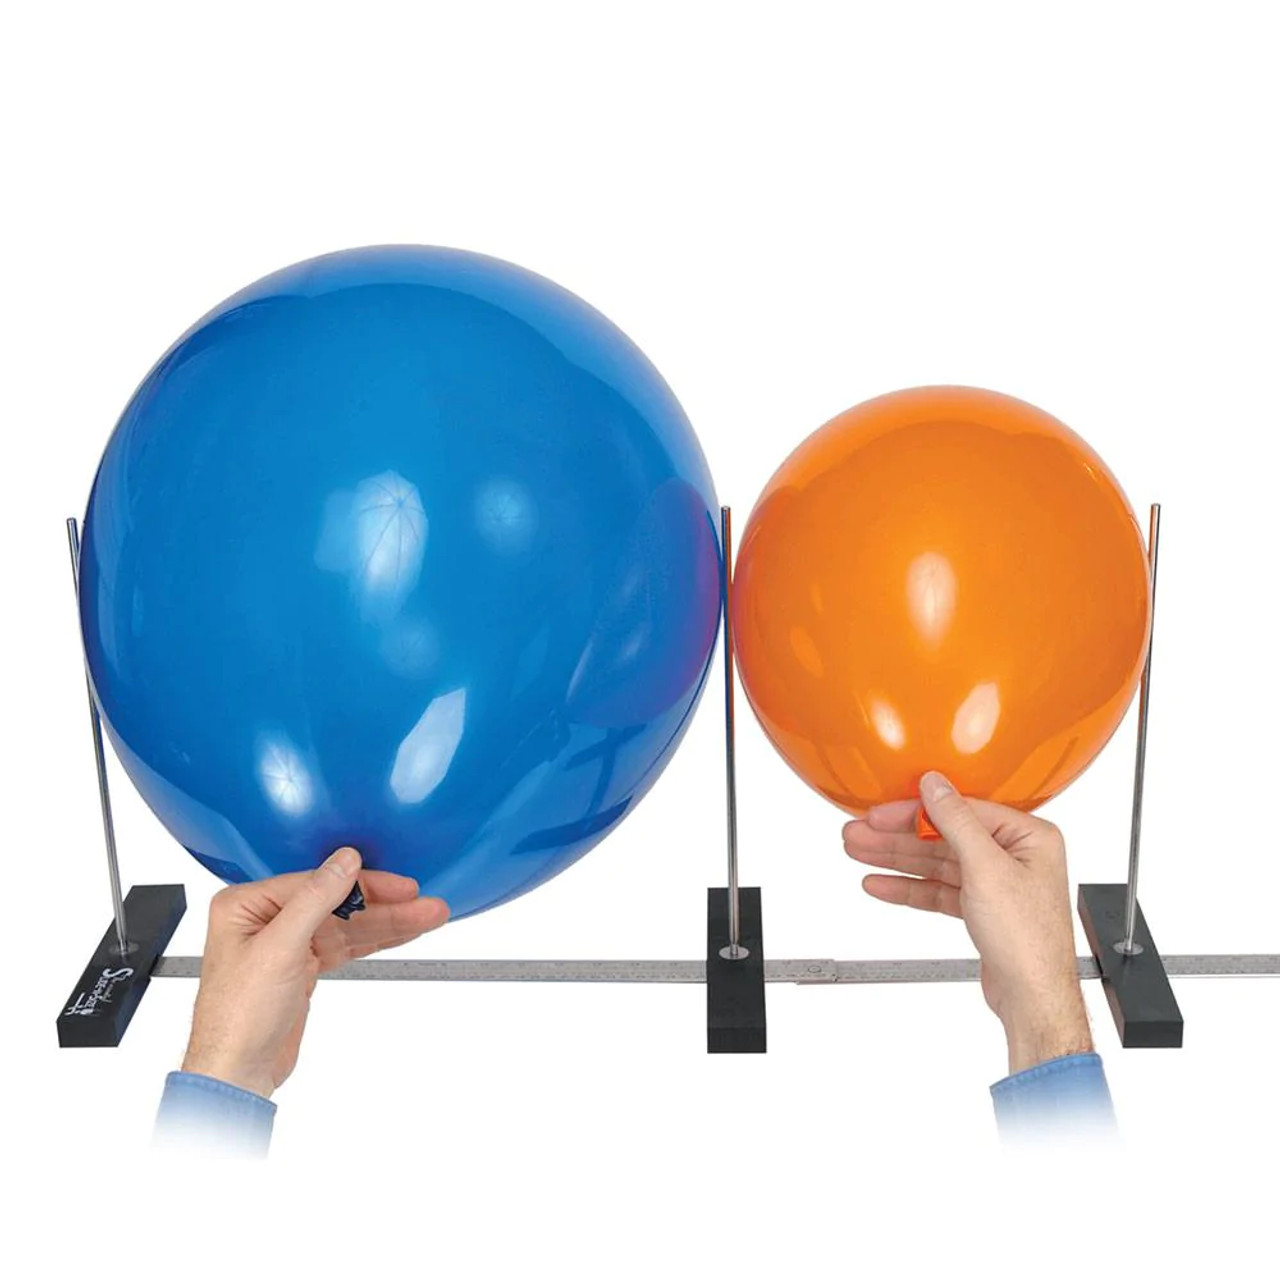 Collapsible Balloon Sizer (17 Sizes)